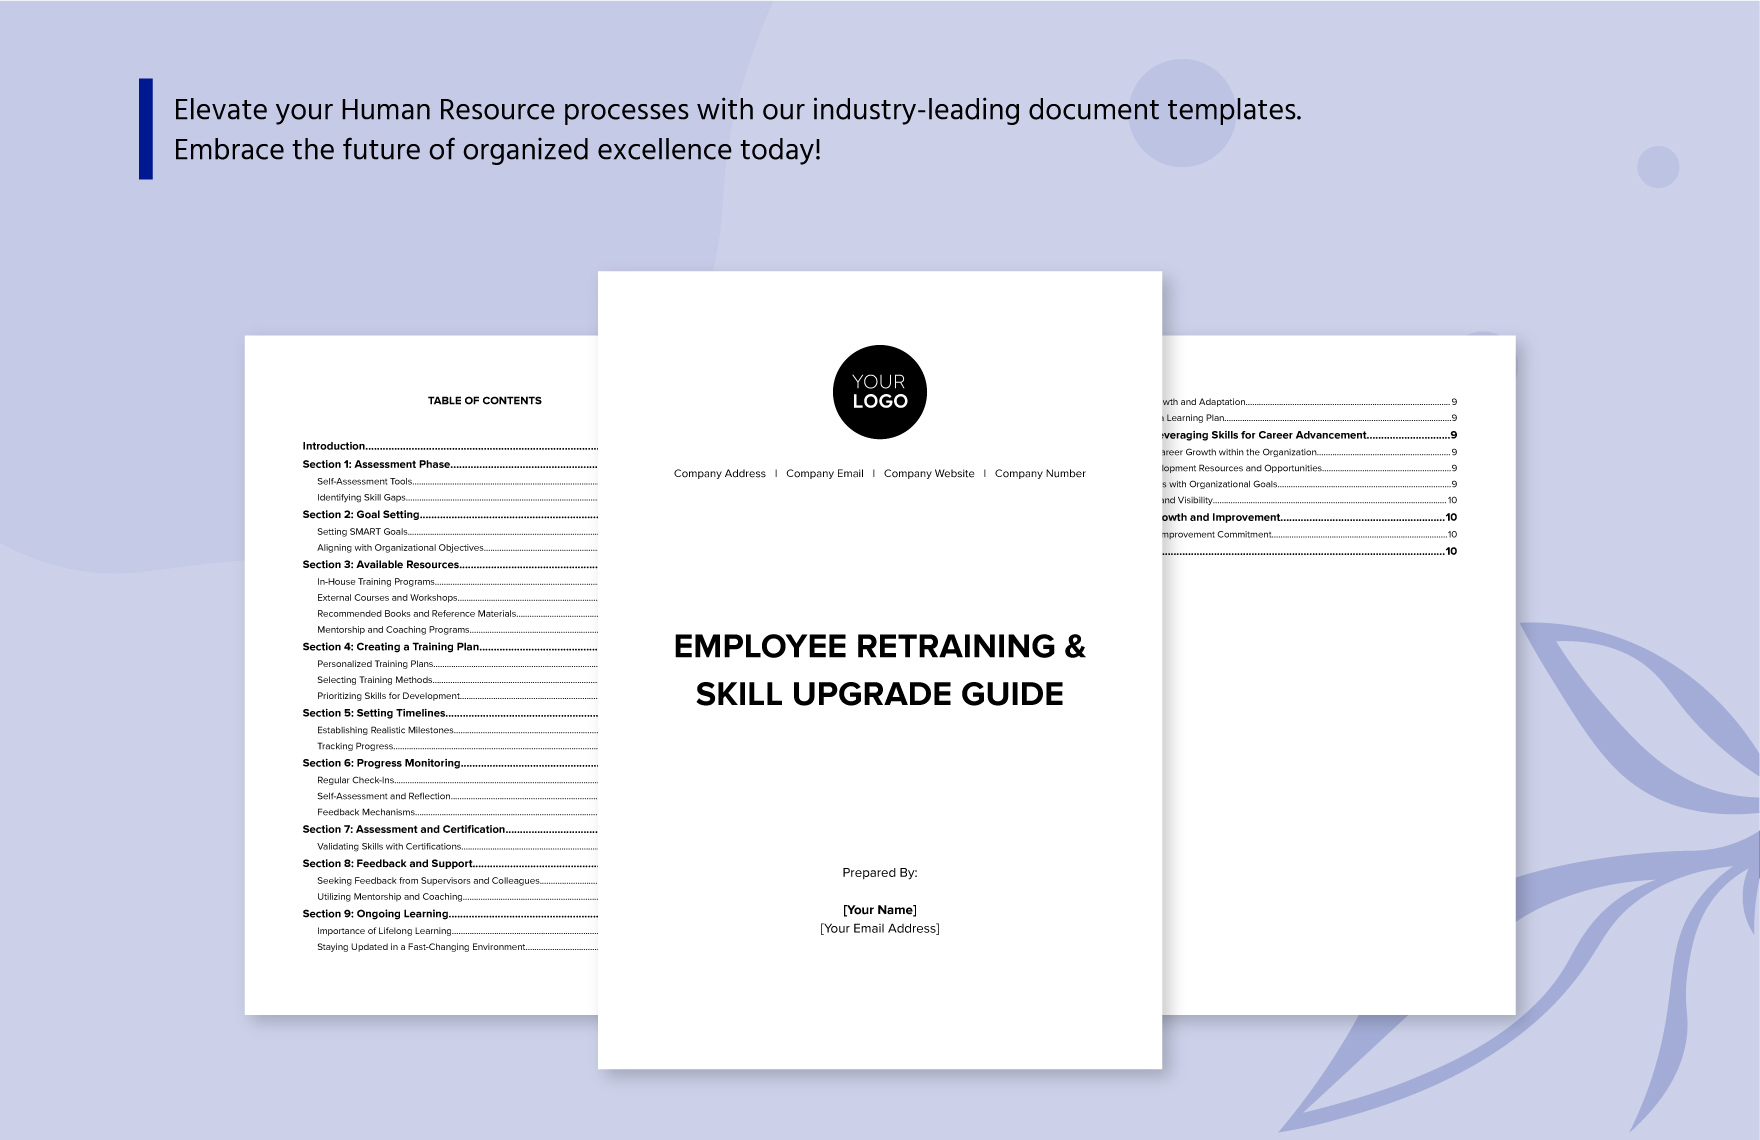 Employee Retraining & Skill Upgrade Guide HR Template